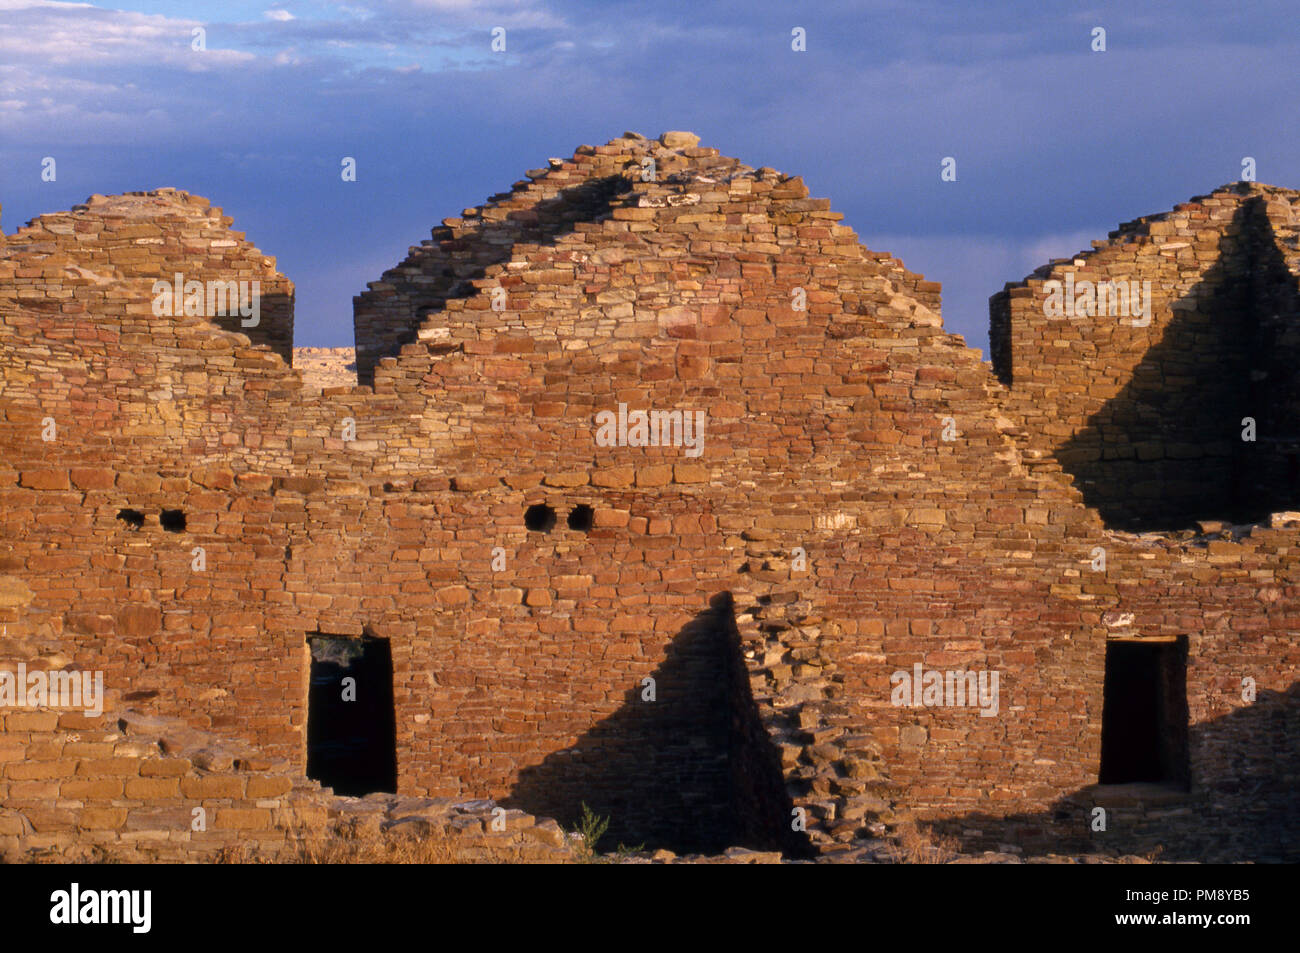 Ruines Anasazi de Pueblo del Arroyo, Chaco Canyon, Nouveau Mexique. Photographie Banque D'Images